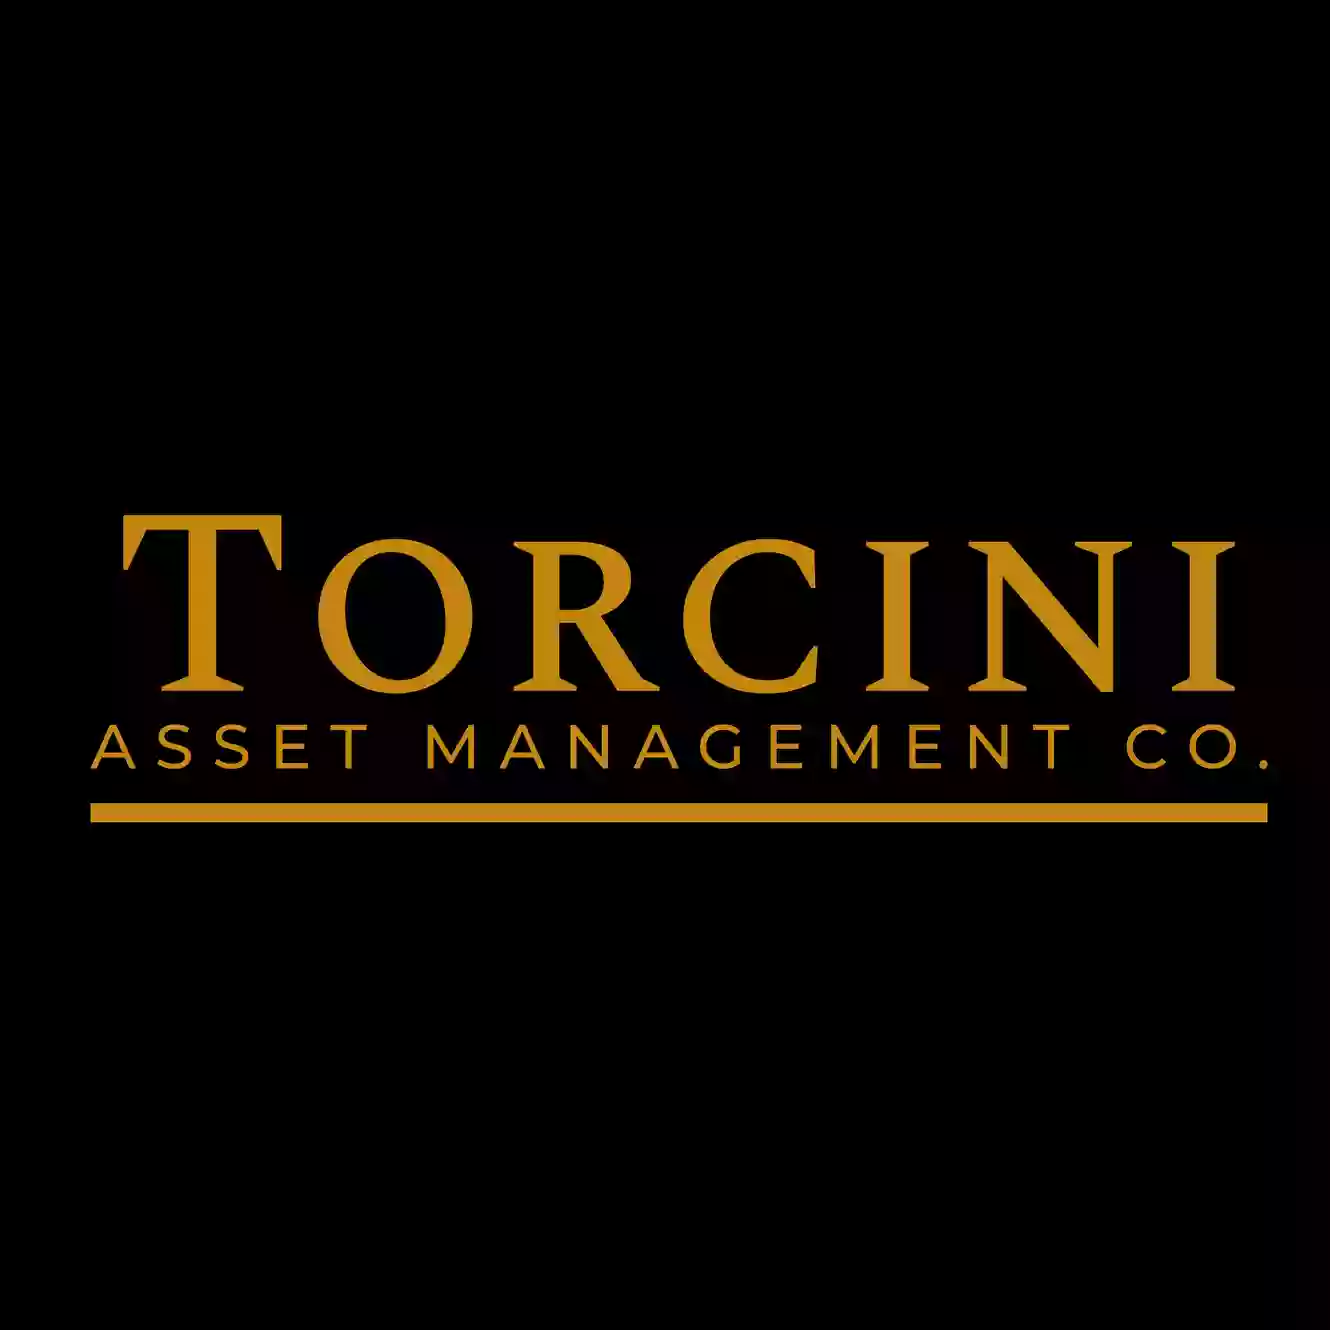 Torcini Asset Management Company